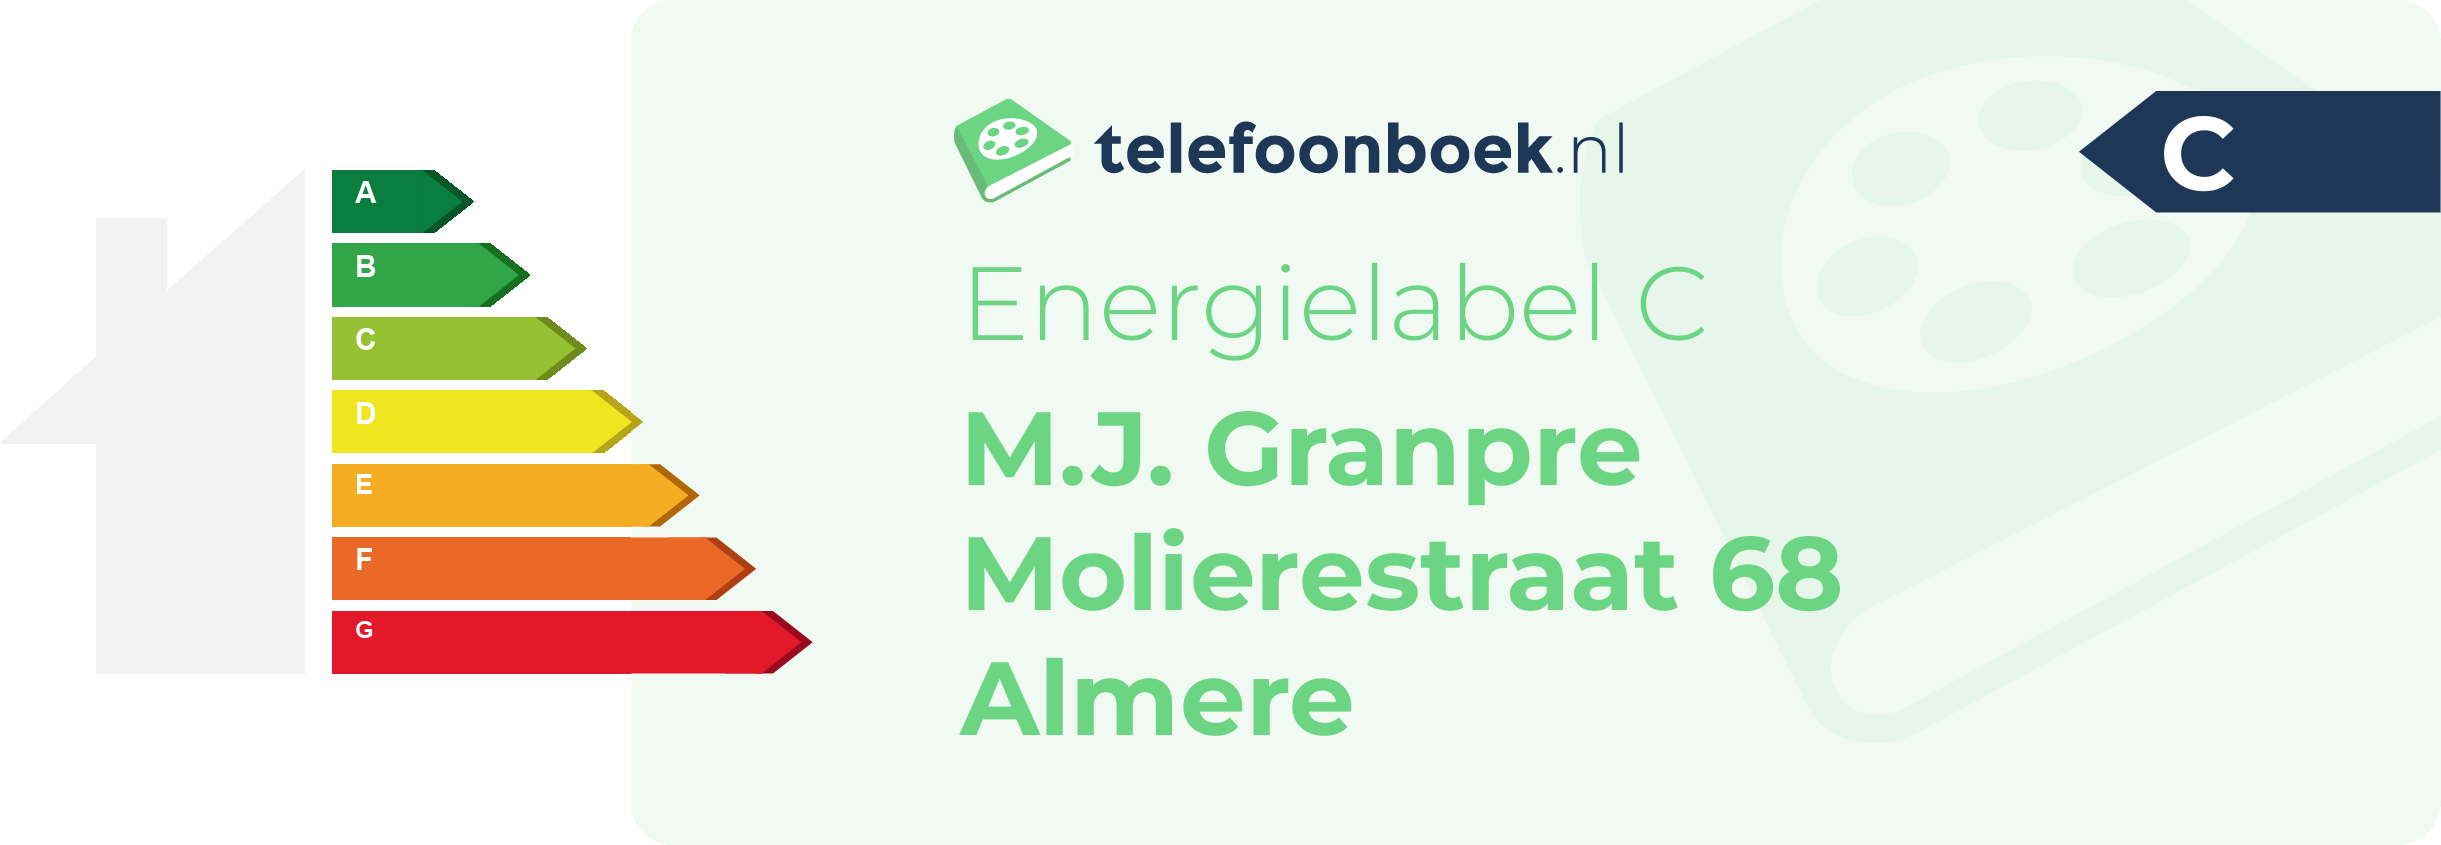 Energielabel M.J. Granpre Molierestraat 68 Almere